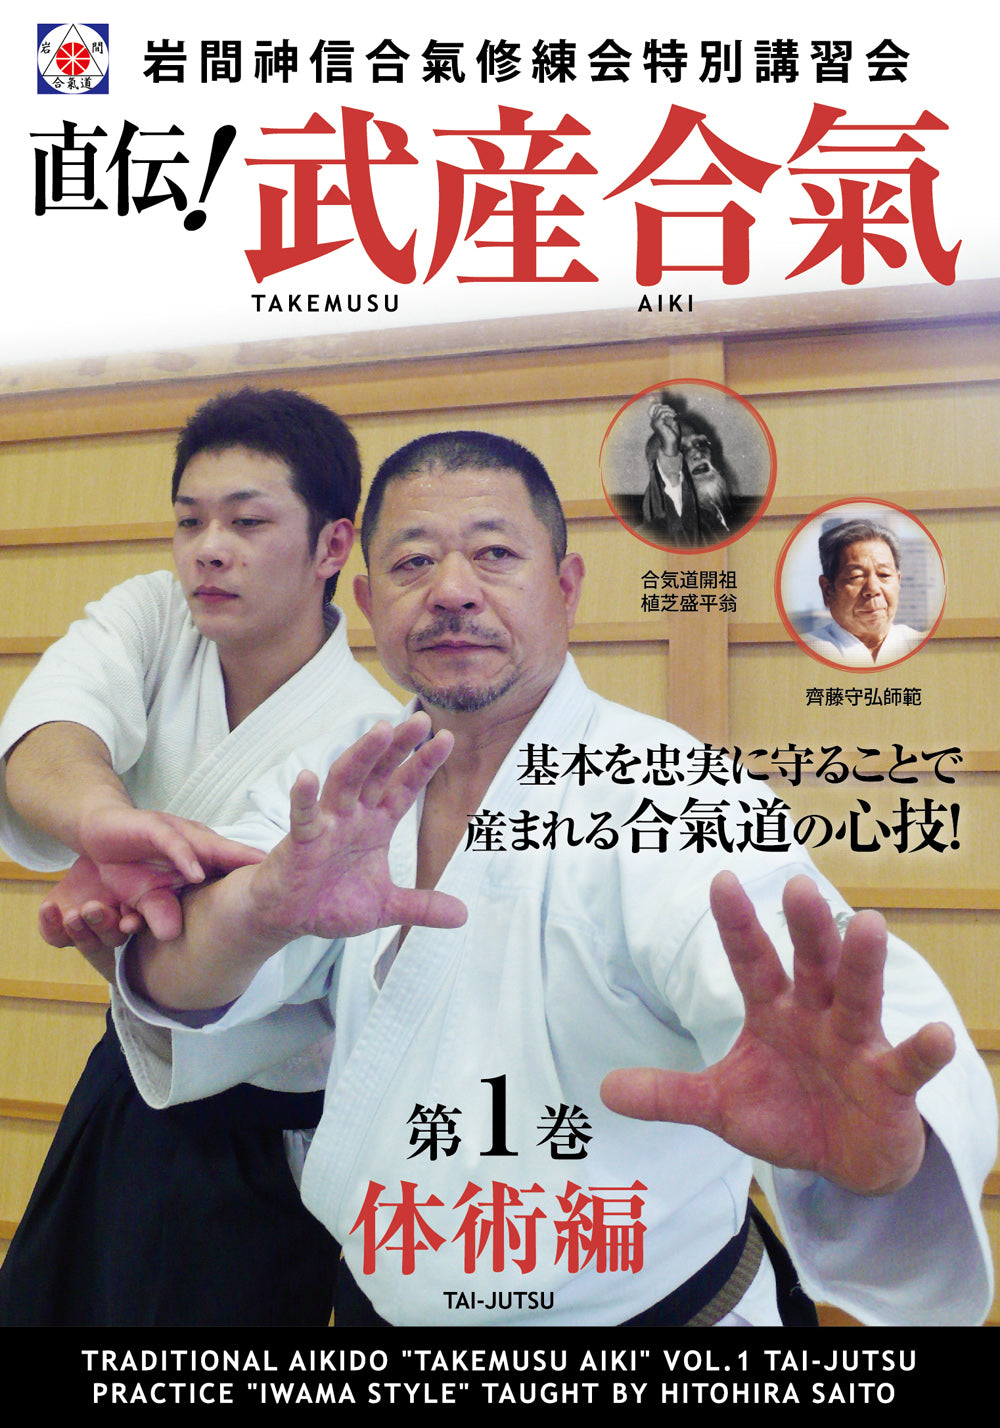 Takemusu Aiki DVD 1 with Hitohiro Saito